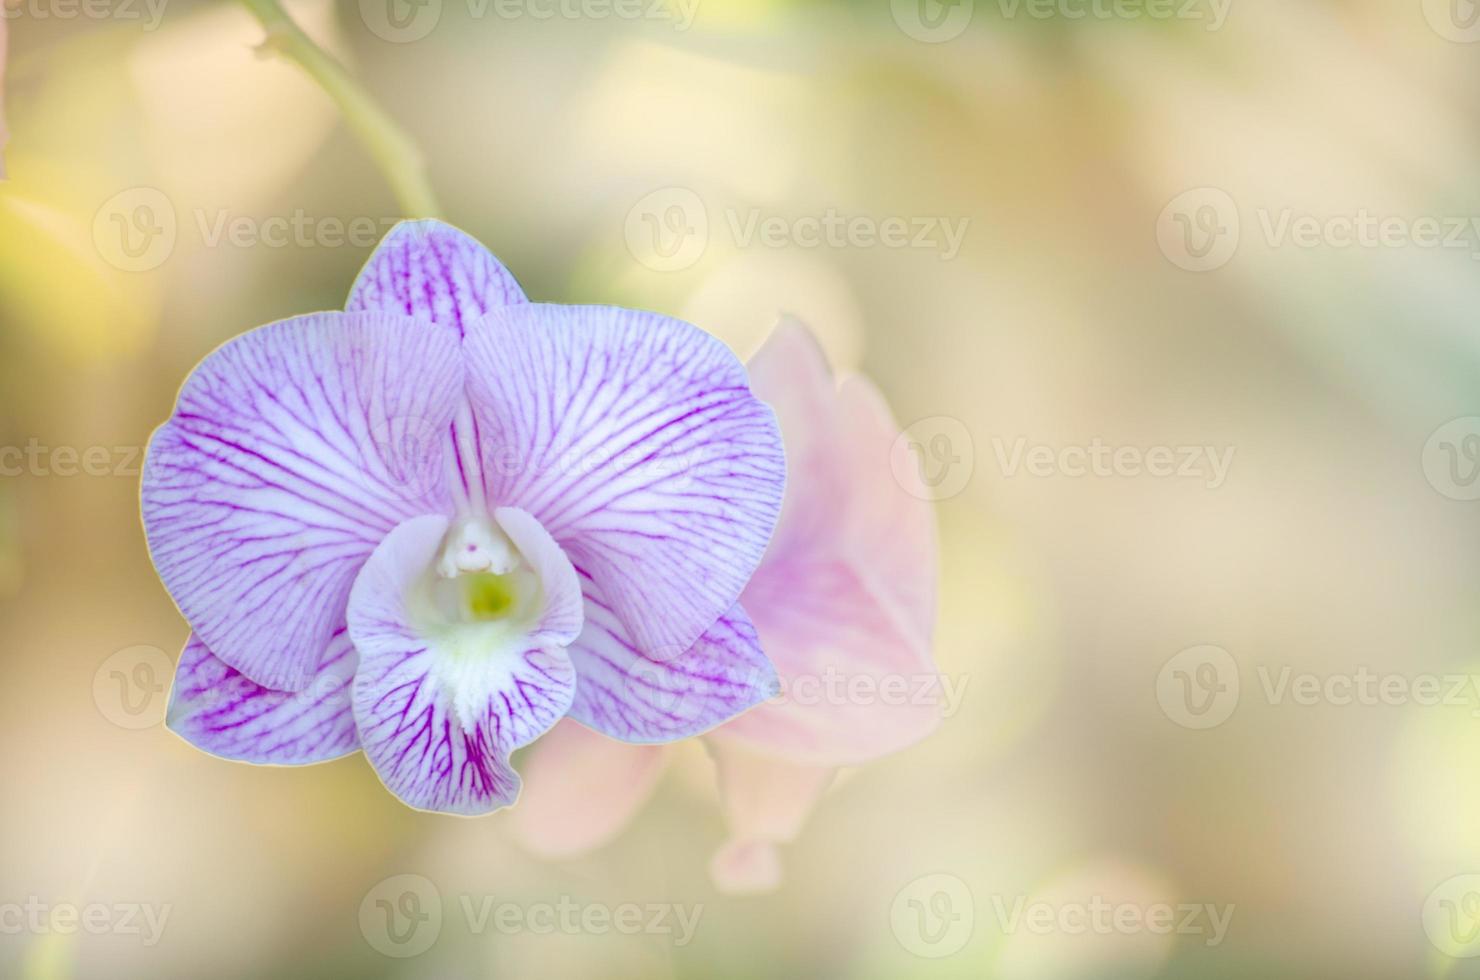 orquídea púrpura y blanca sobre fondo de naturaleza borrosa. foto